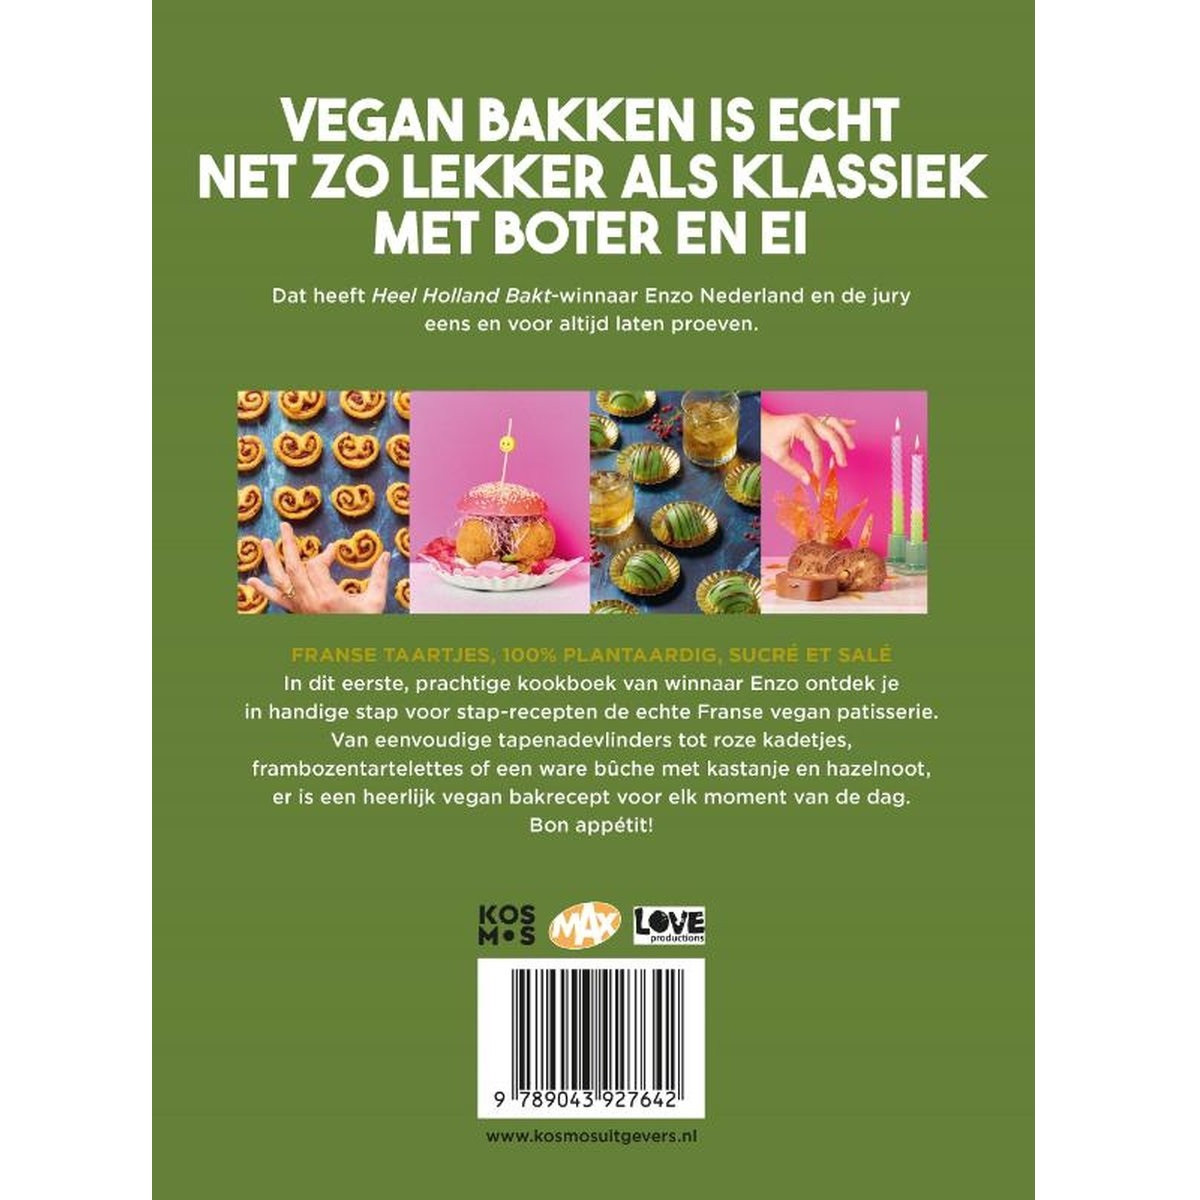 Book: Heel Holland Bakt Vegan